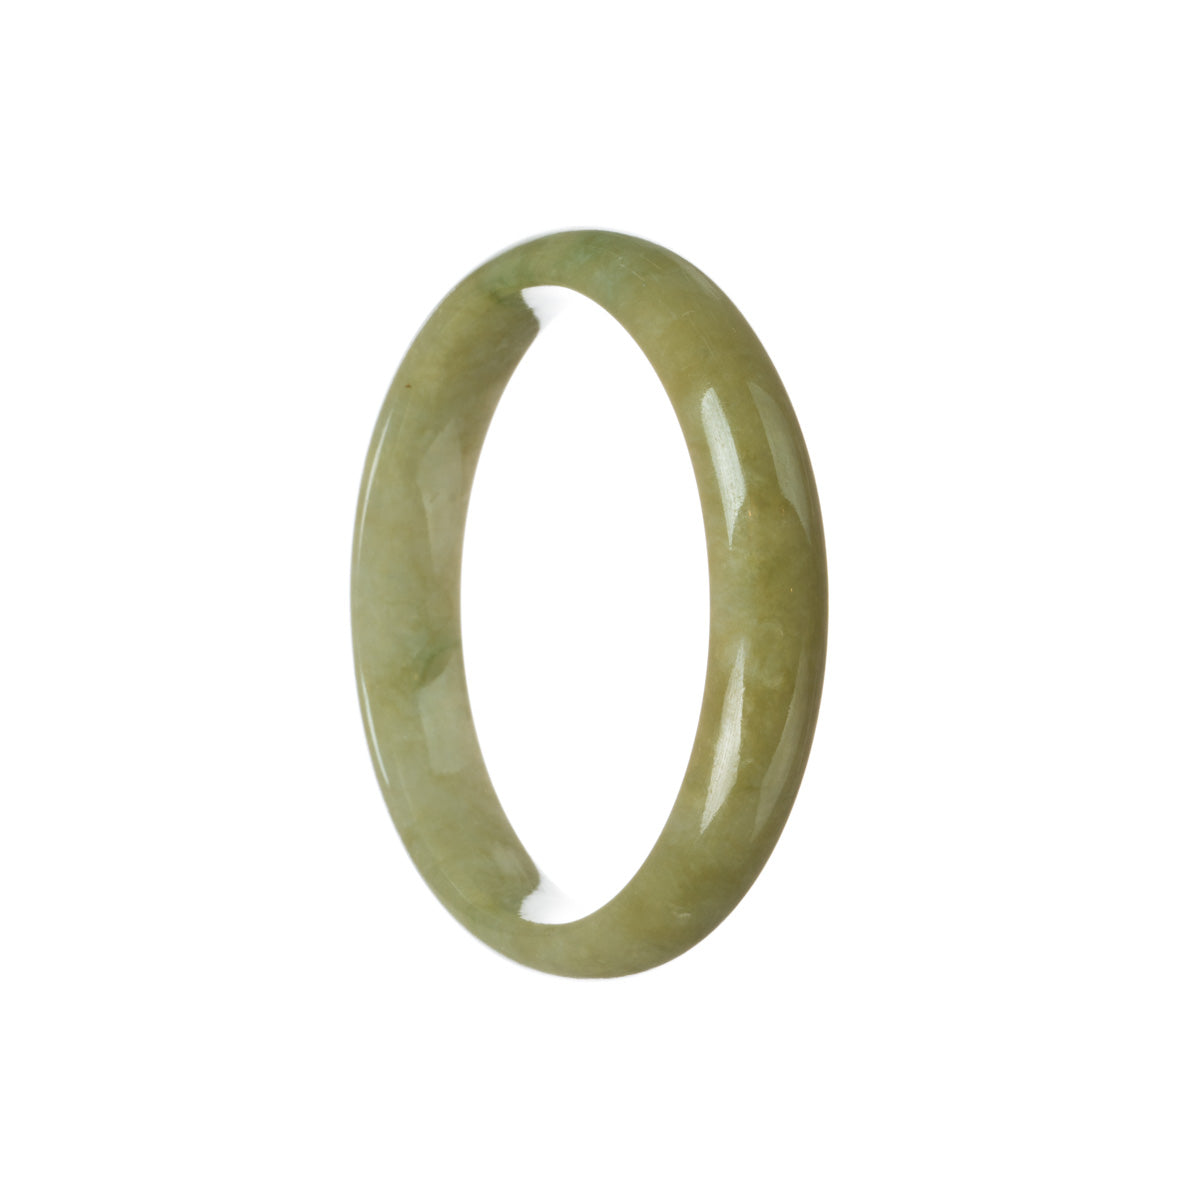 A half moon shaped Burmese Jade bangle bracelet in a genuine natural brownish olive green color, from MAYS GEMS.